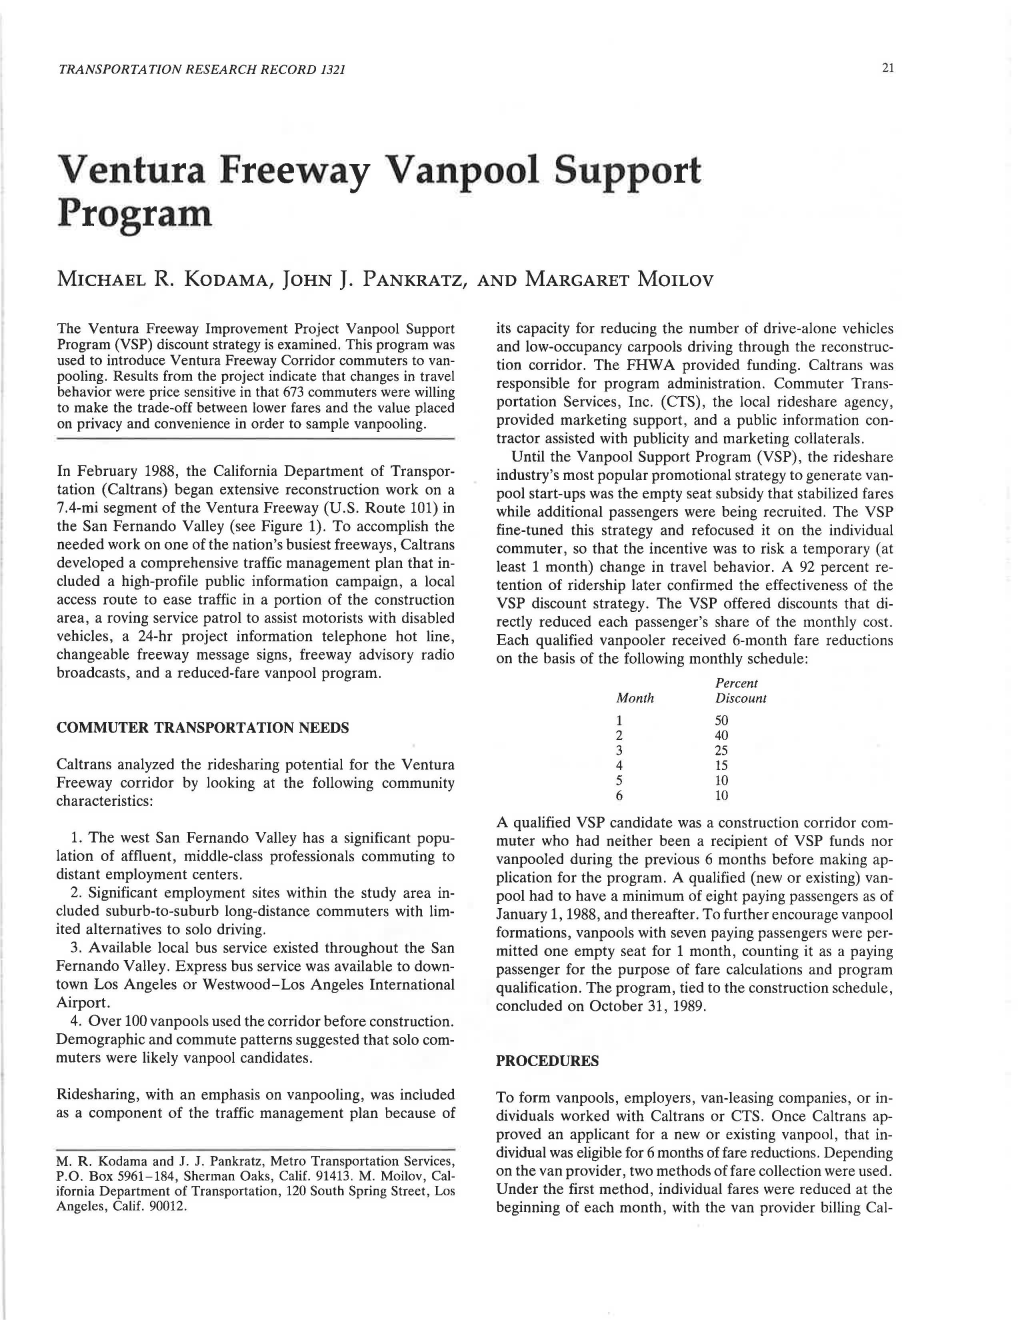 Ventura Freeway V Anpool Support Program